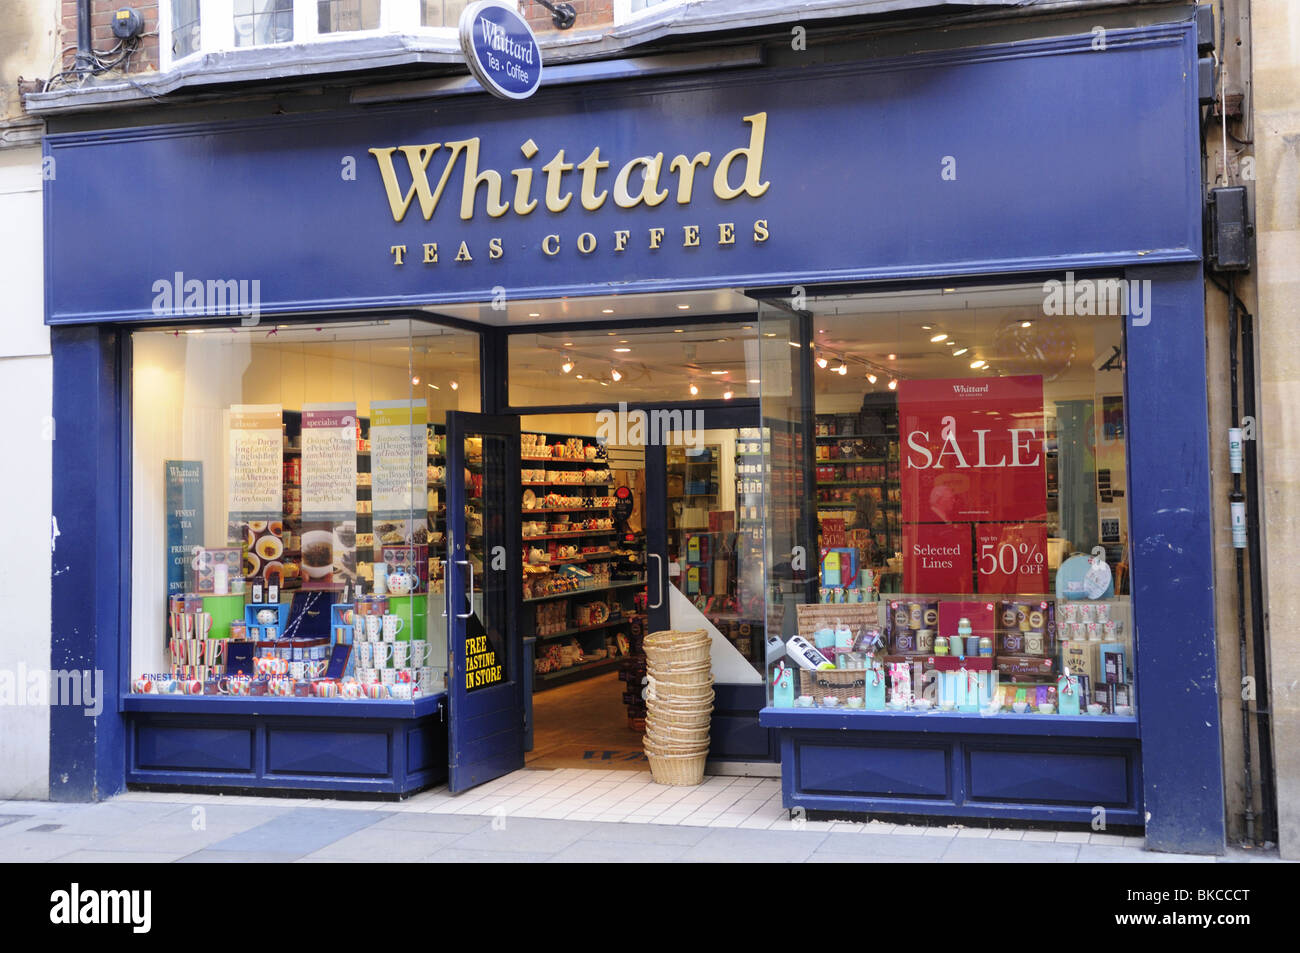 Whittard Teas Coffees Shop, Cambridge England UK Stock Photo